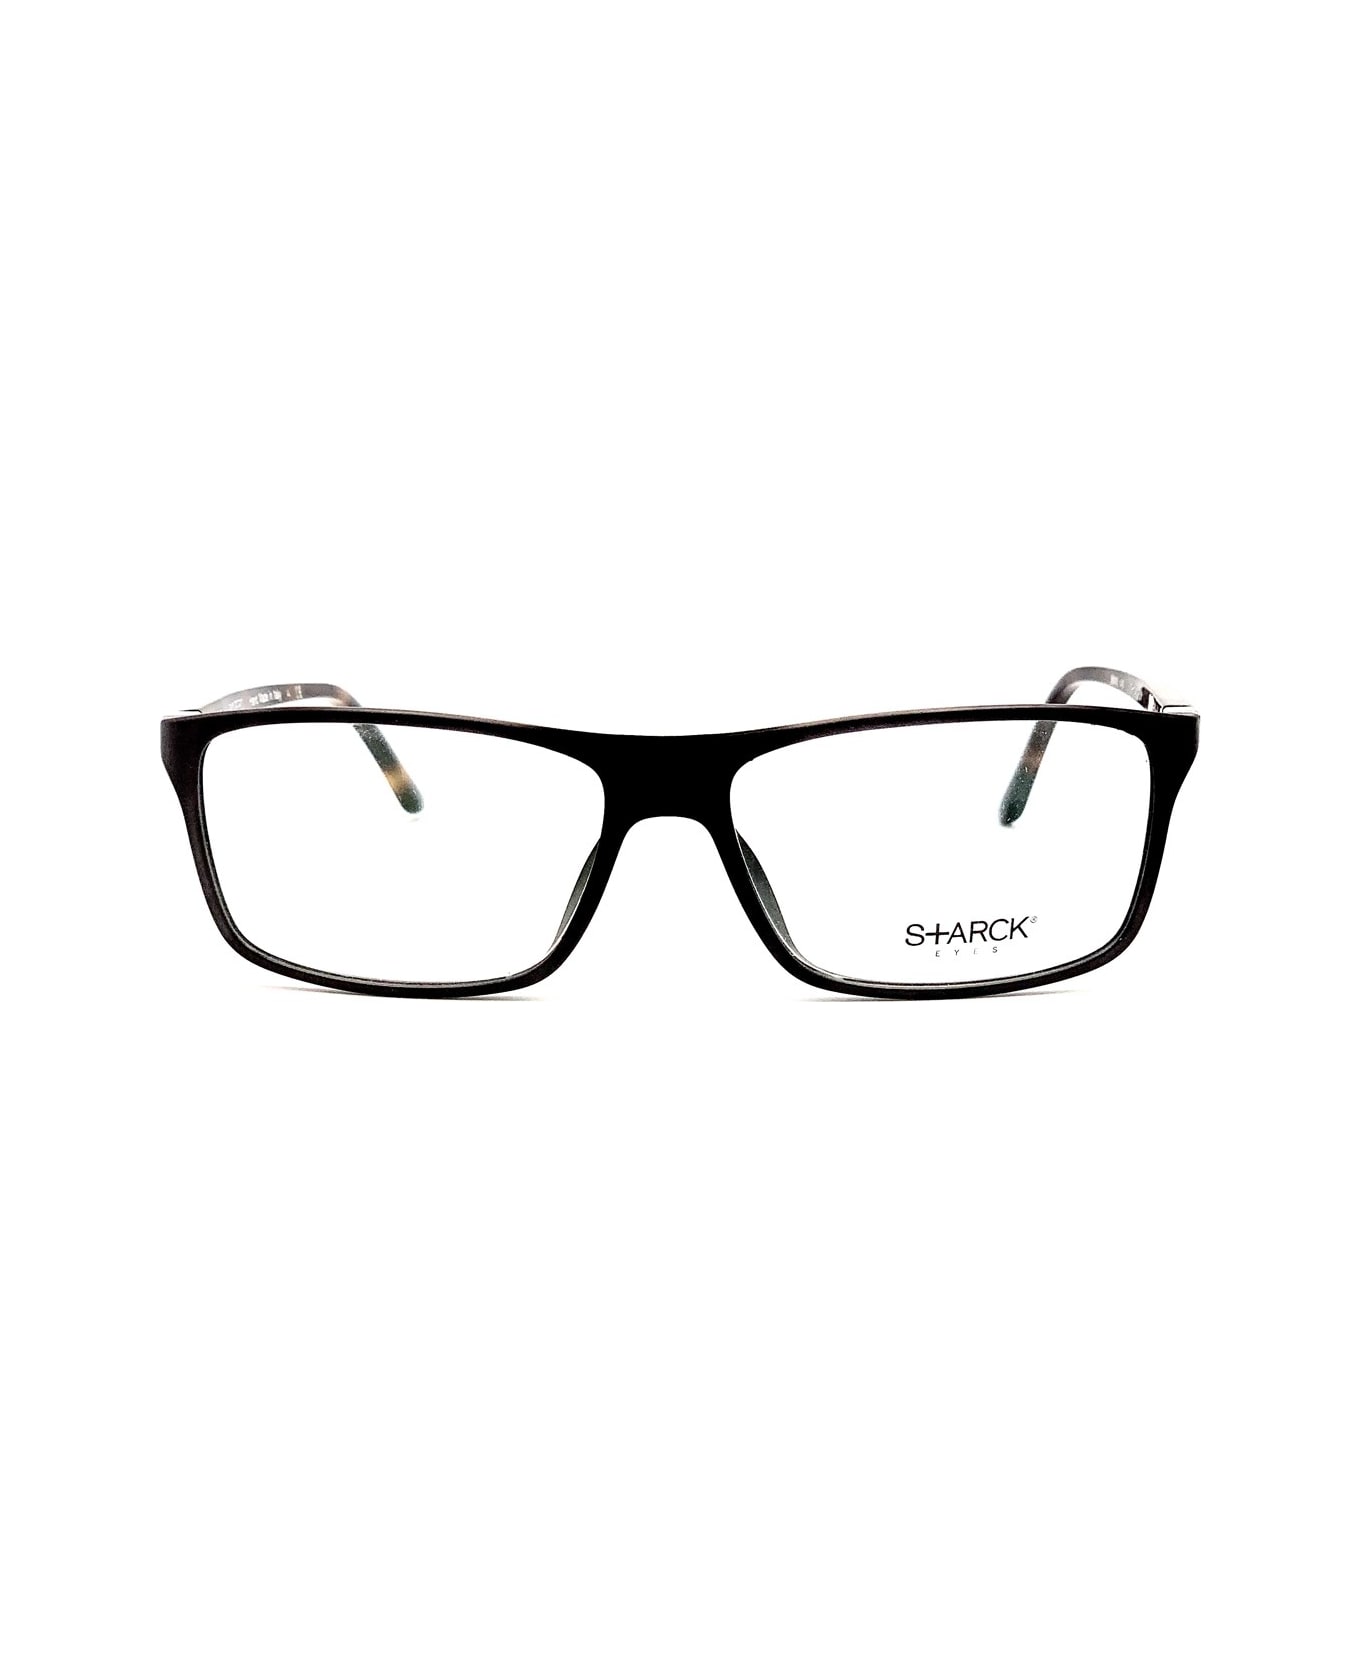 Philippe Starck 1043 Vista Glasses - Nero アイウェア